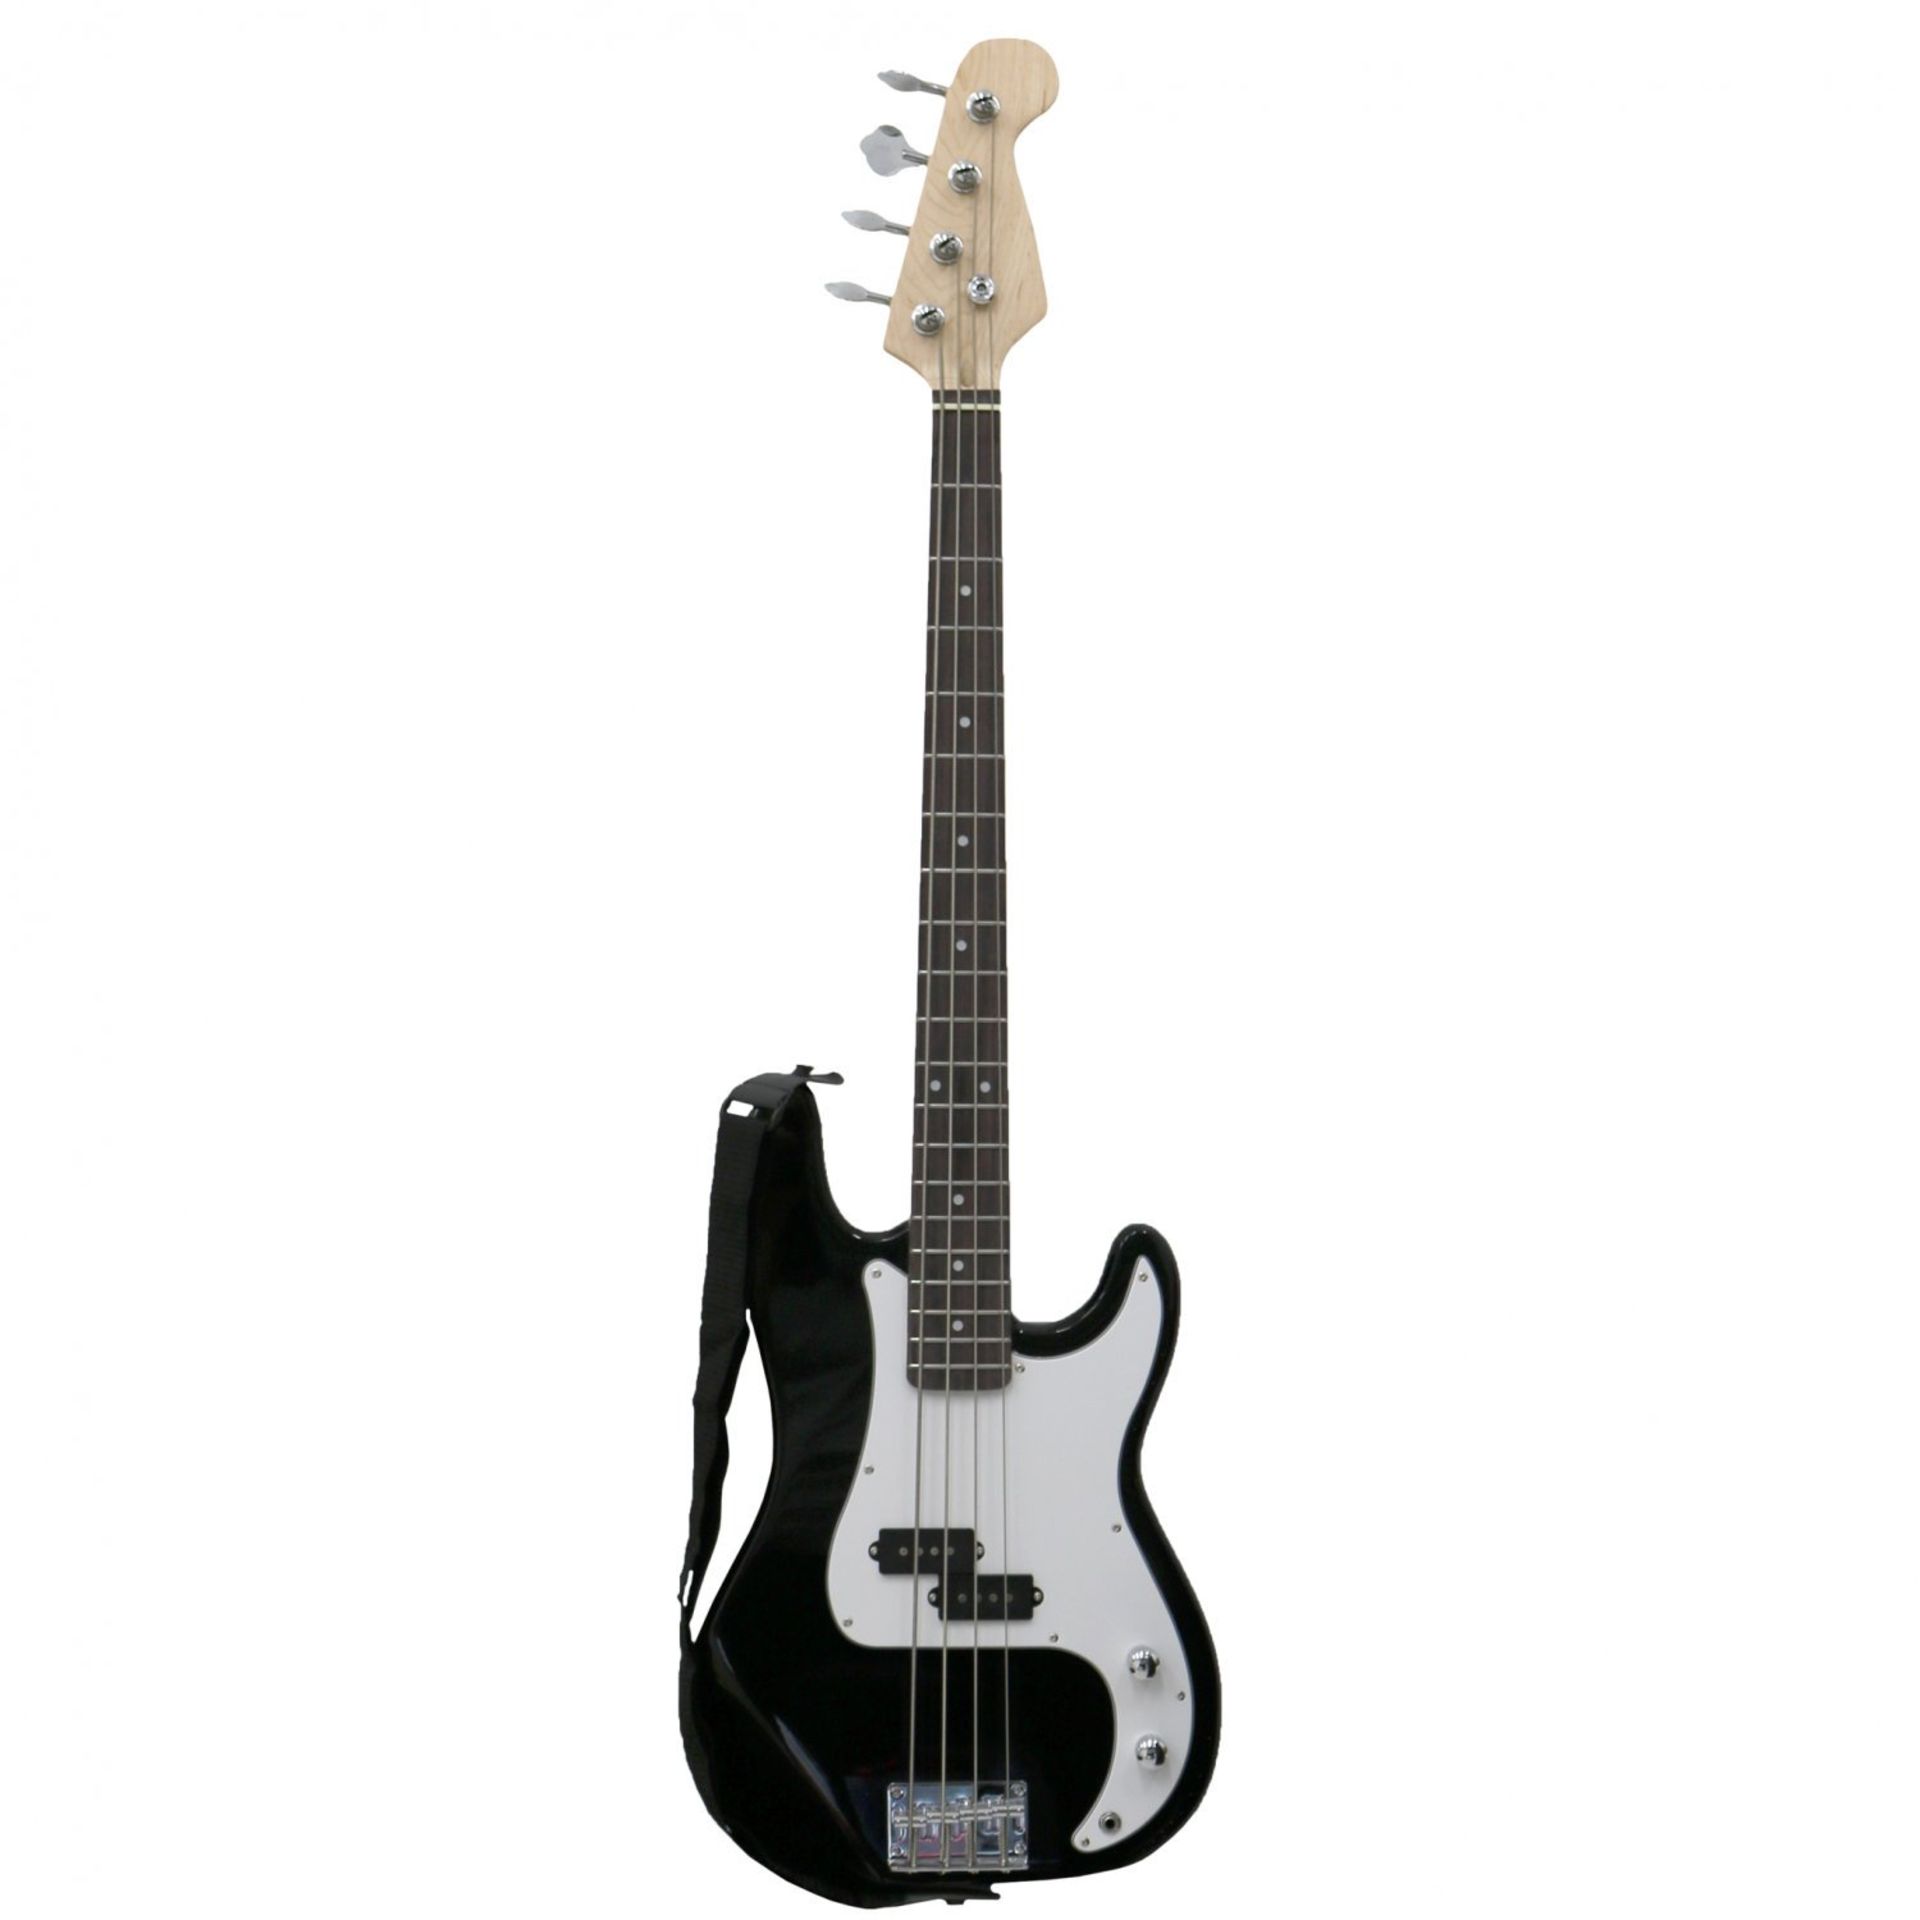 (LF212) PB Precision Style Black 4 String Electric Bass Guitar & 15W Amp The PB is a precisi... - Bild 2 aus 2